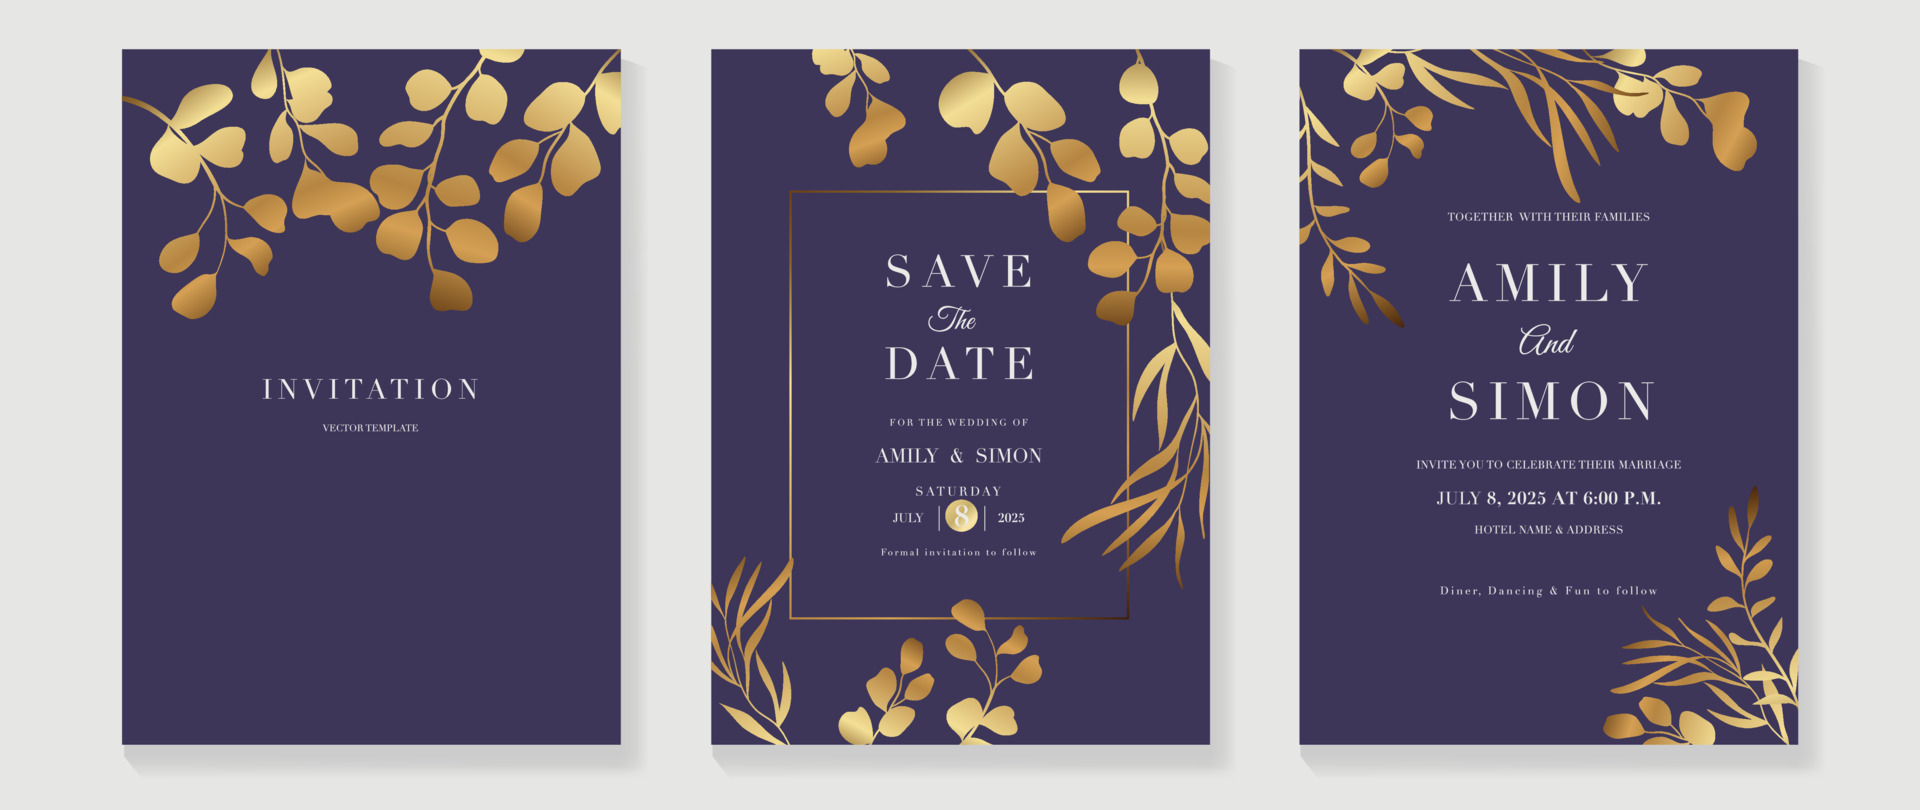 luxury wedding invitation card background vector. golden texture